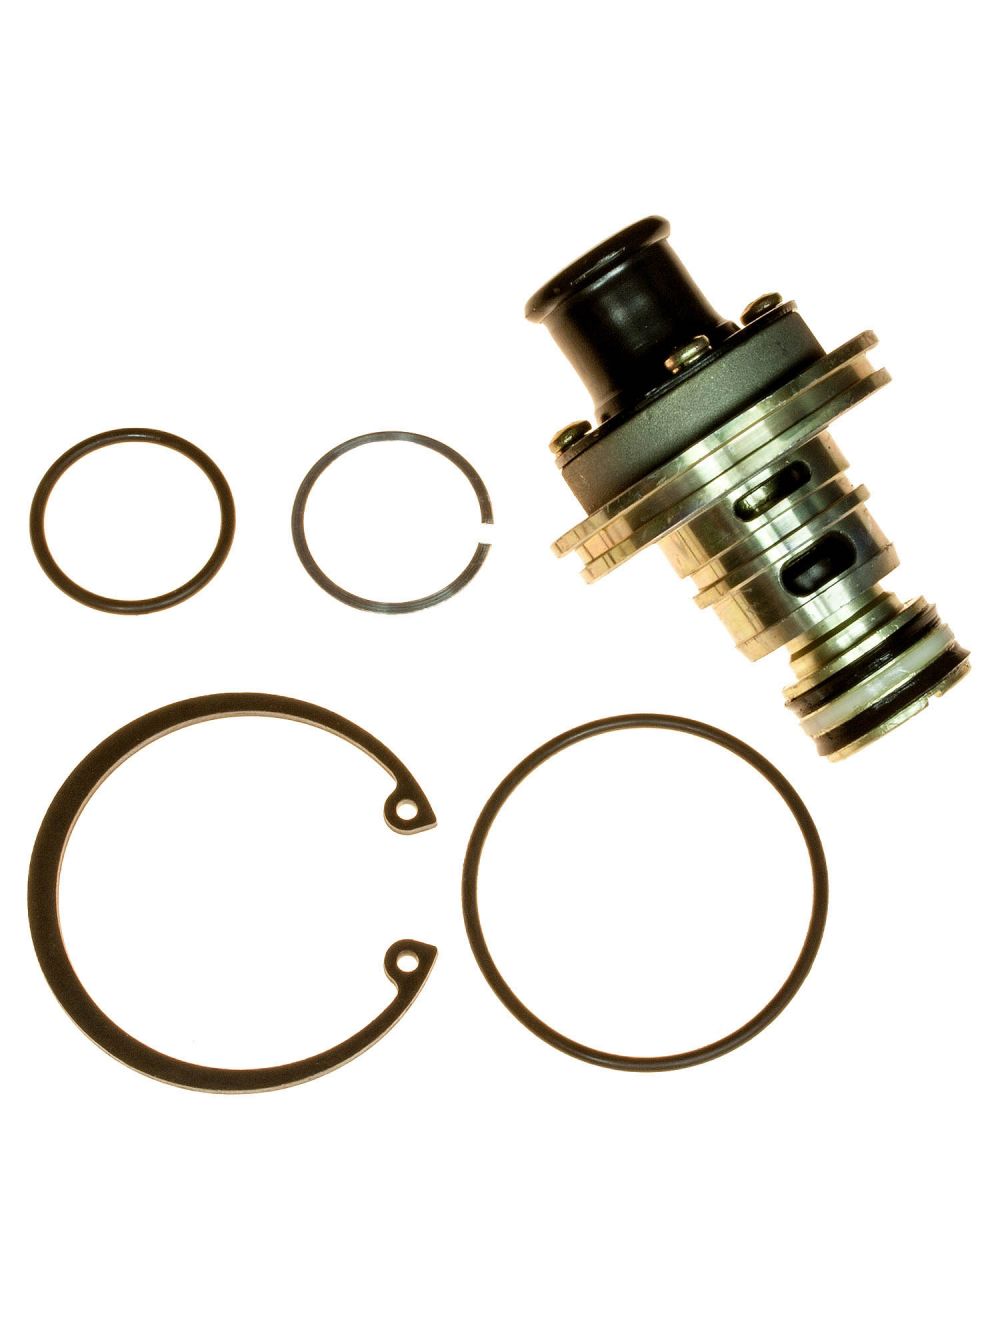 Kit changement de valve de pneu - UO10931 